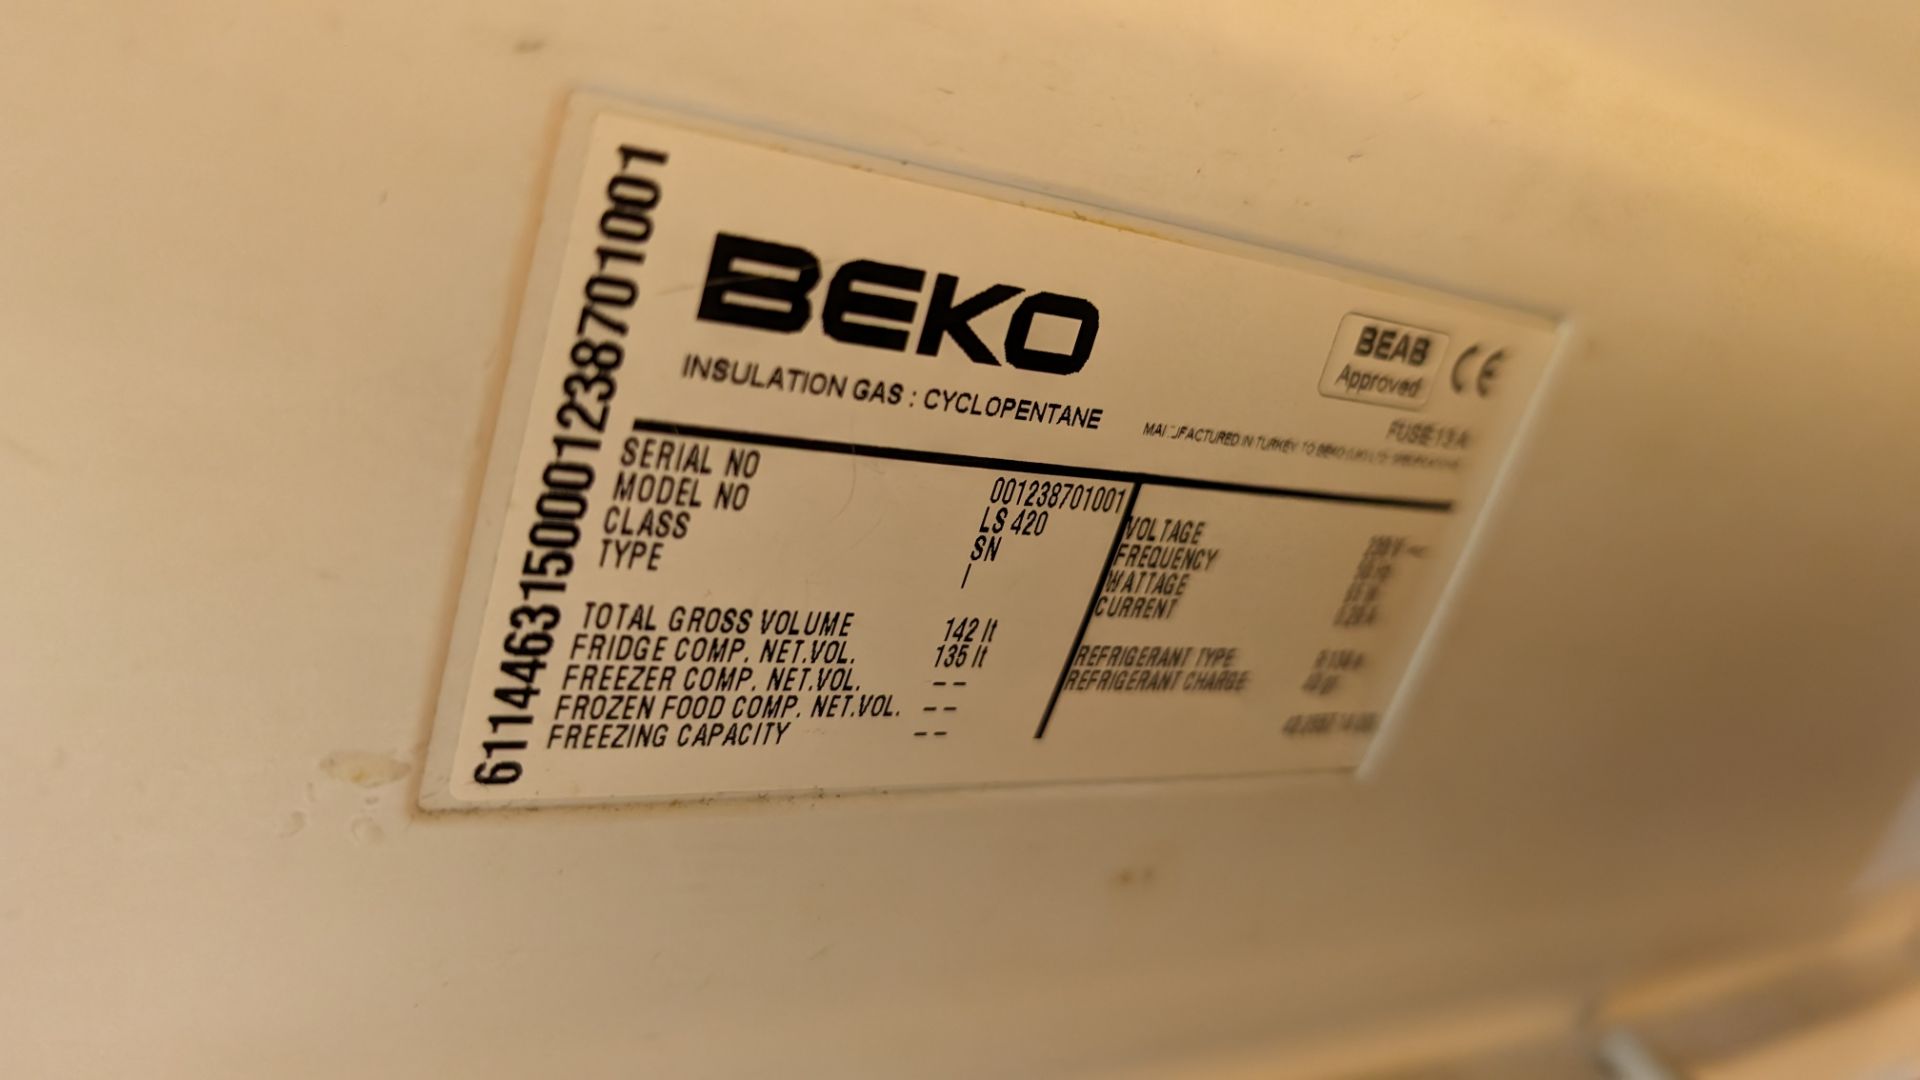 Beko undercounter domestic fridge - Image 4 of 5